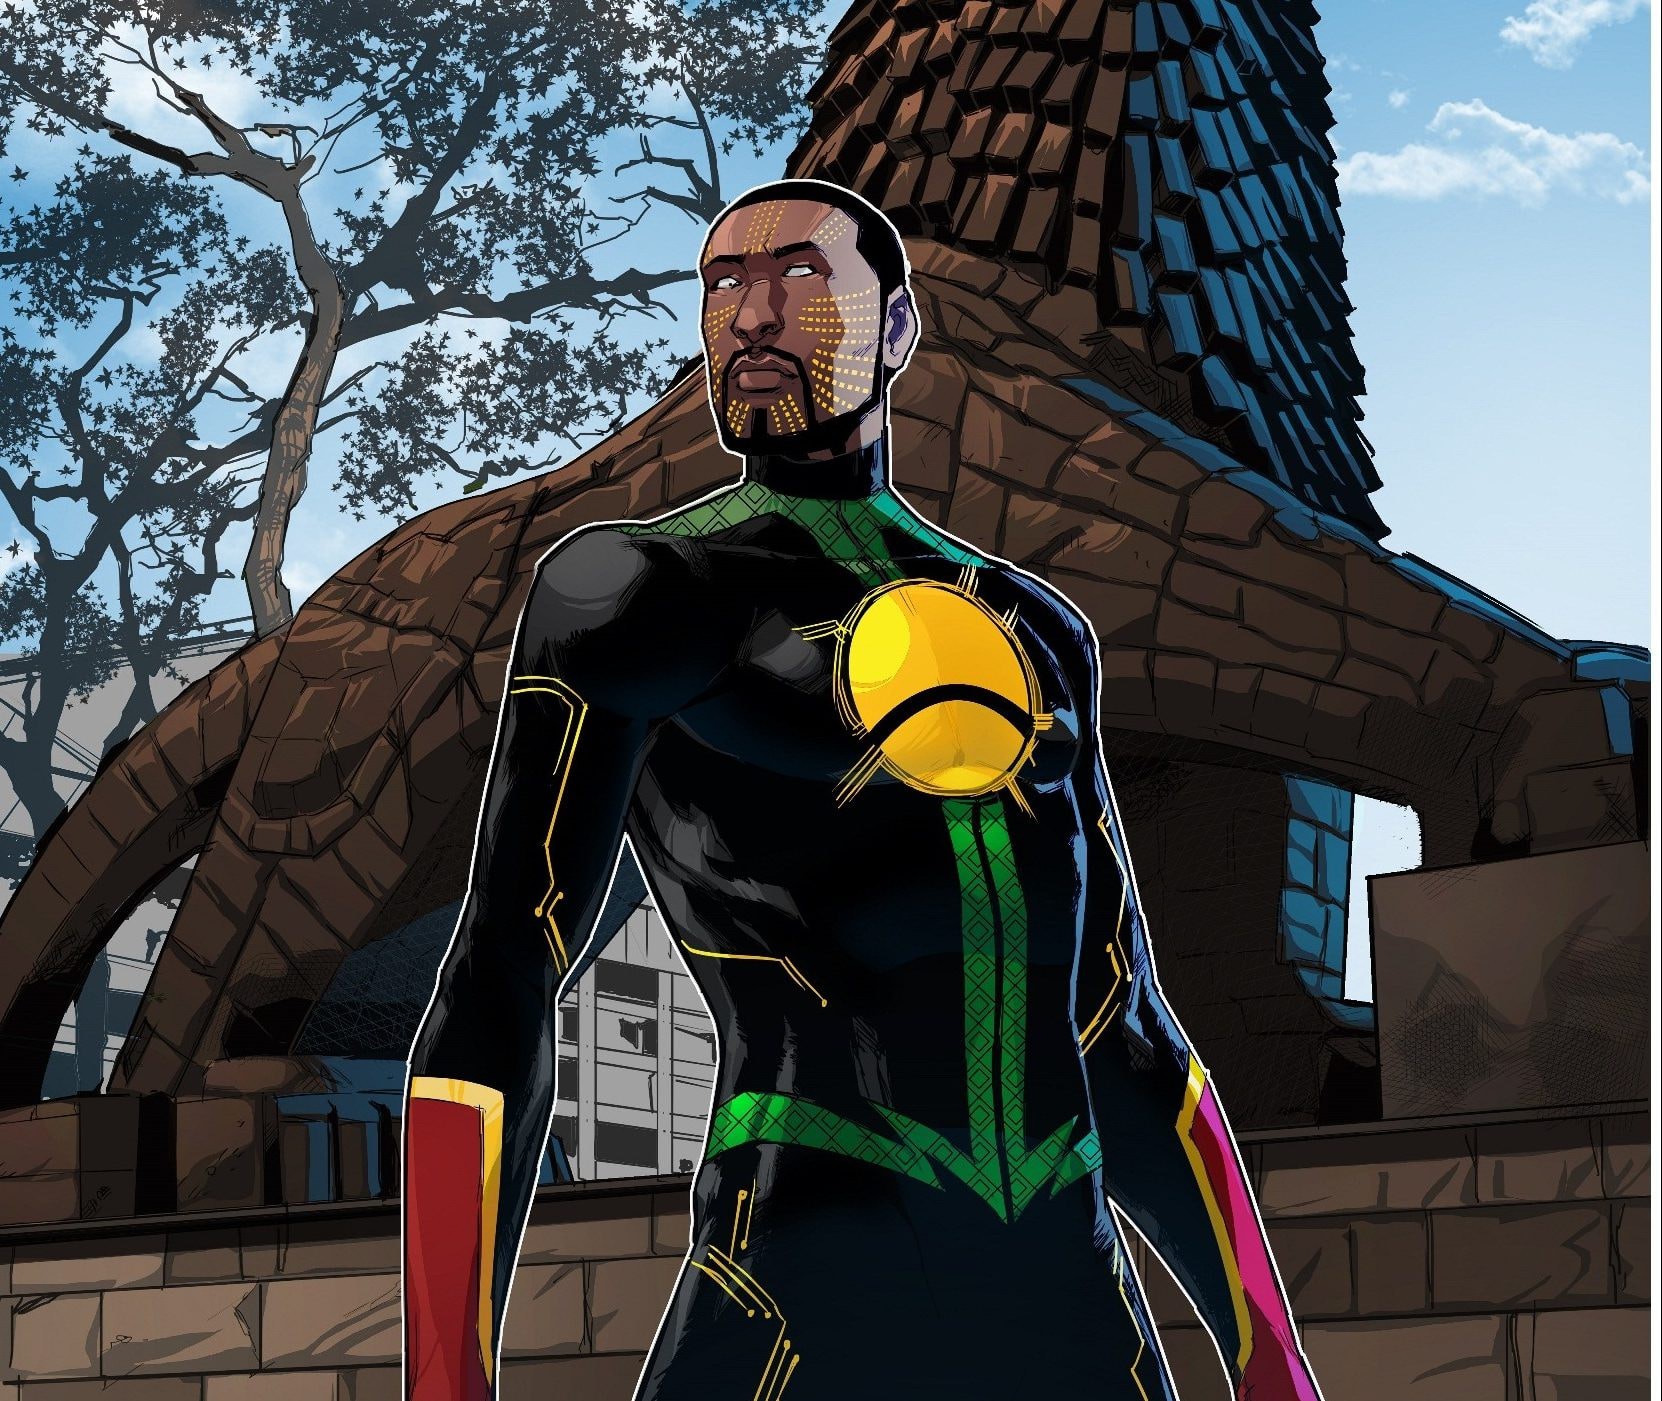 Meet the Creator of Ethiopia's First Comic Book Superhero